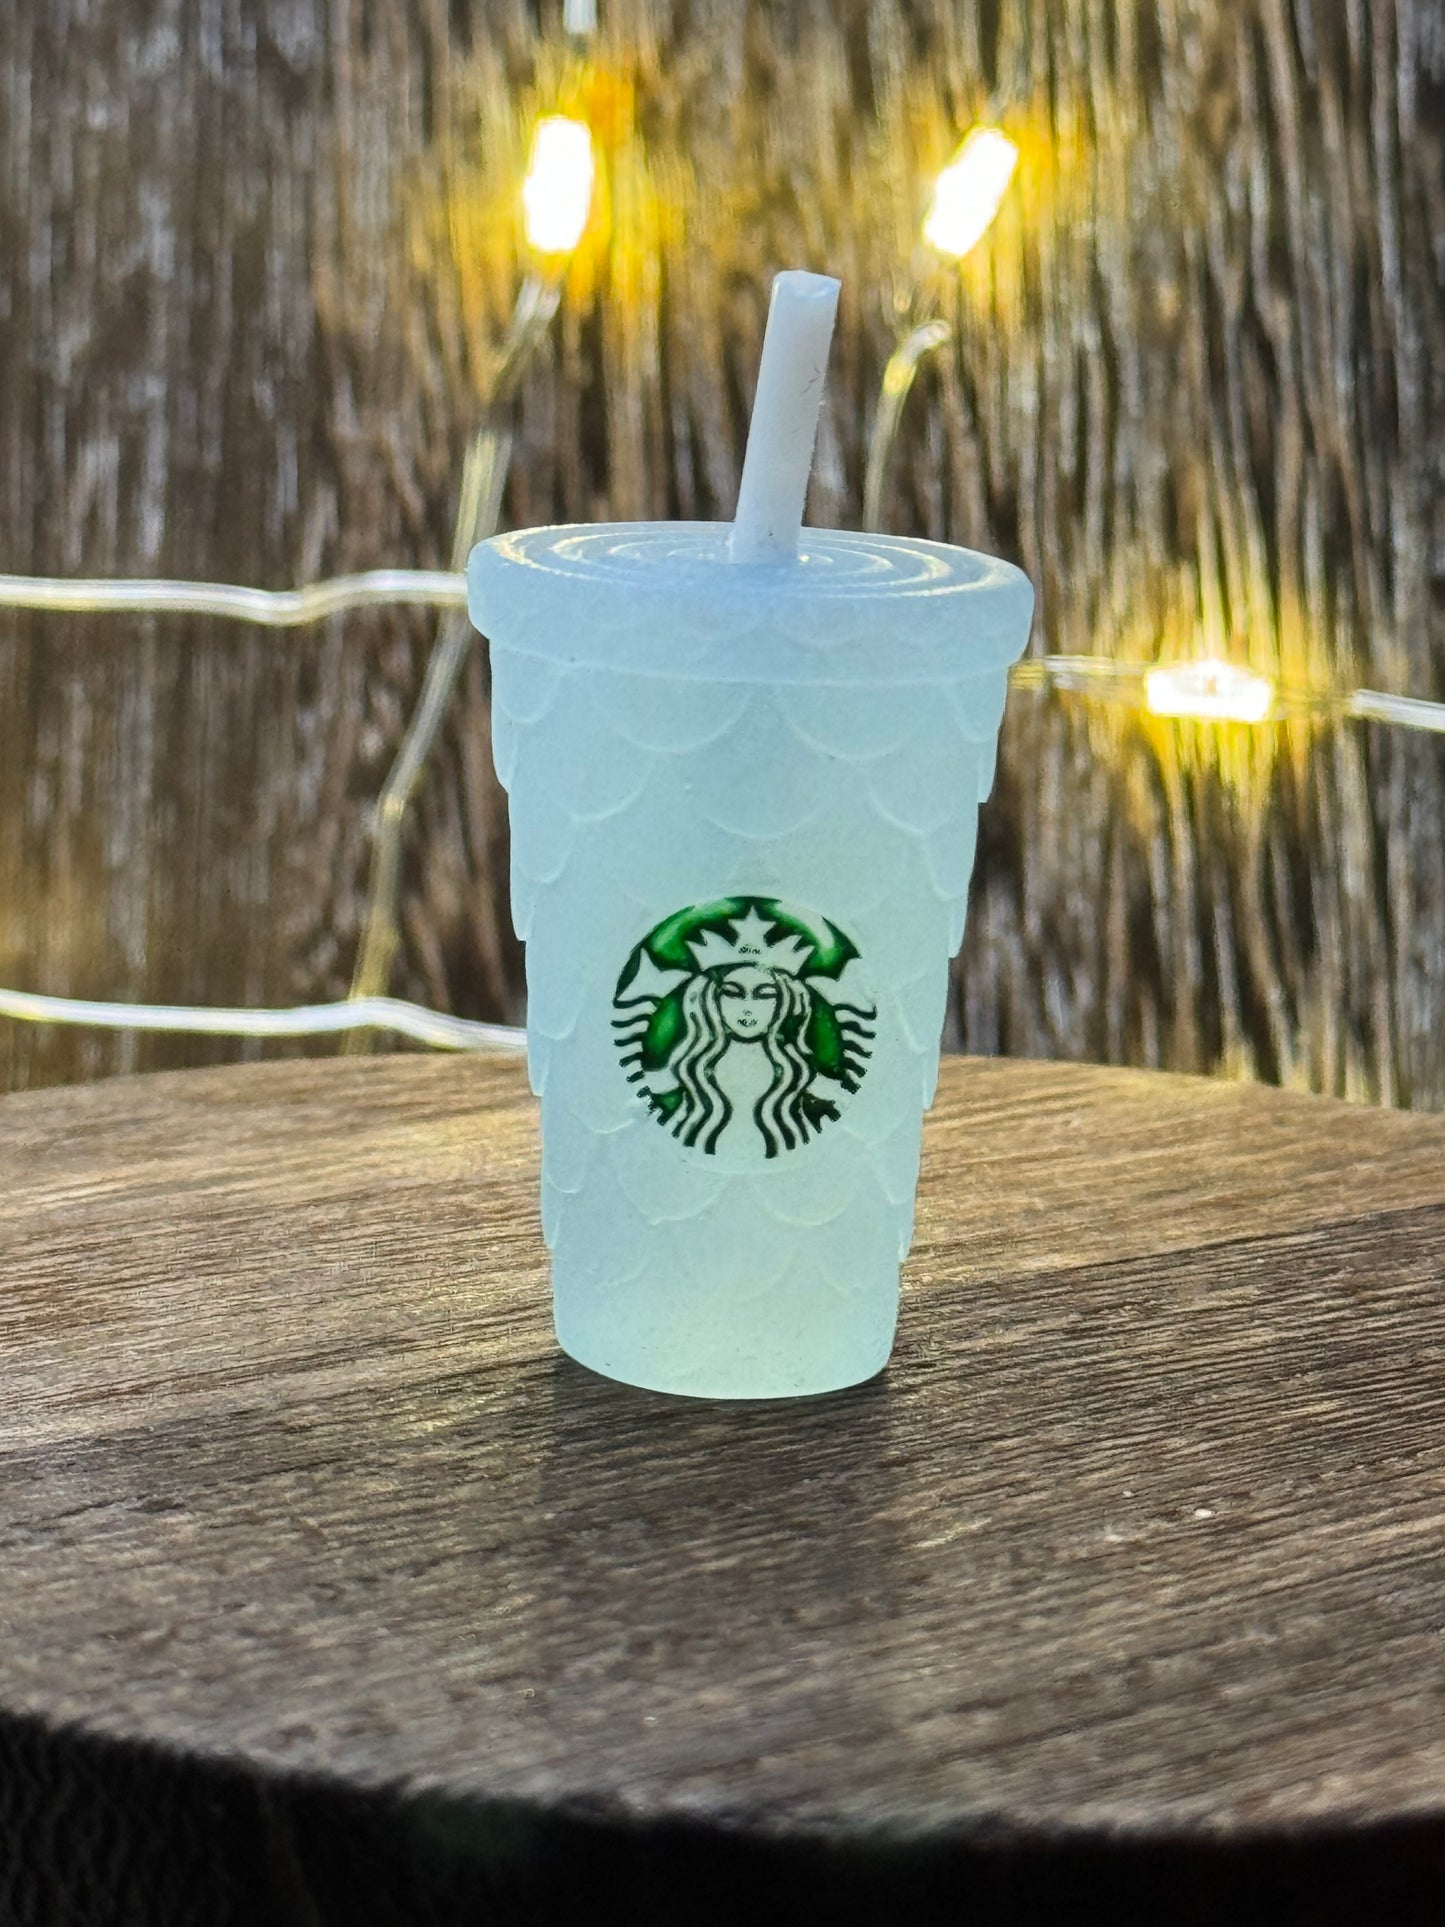 Starbucks Cup with Straw Acrylic Charm